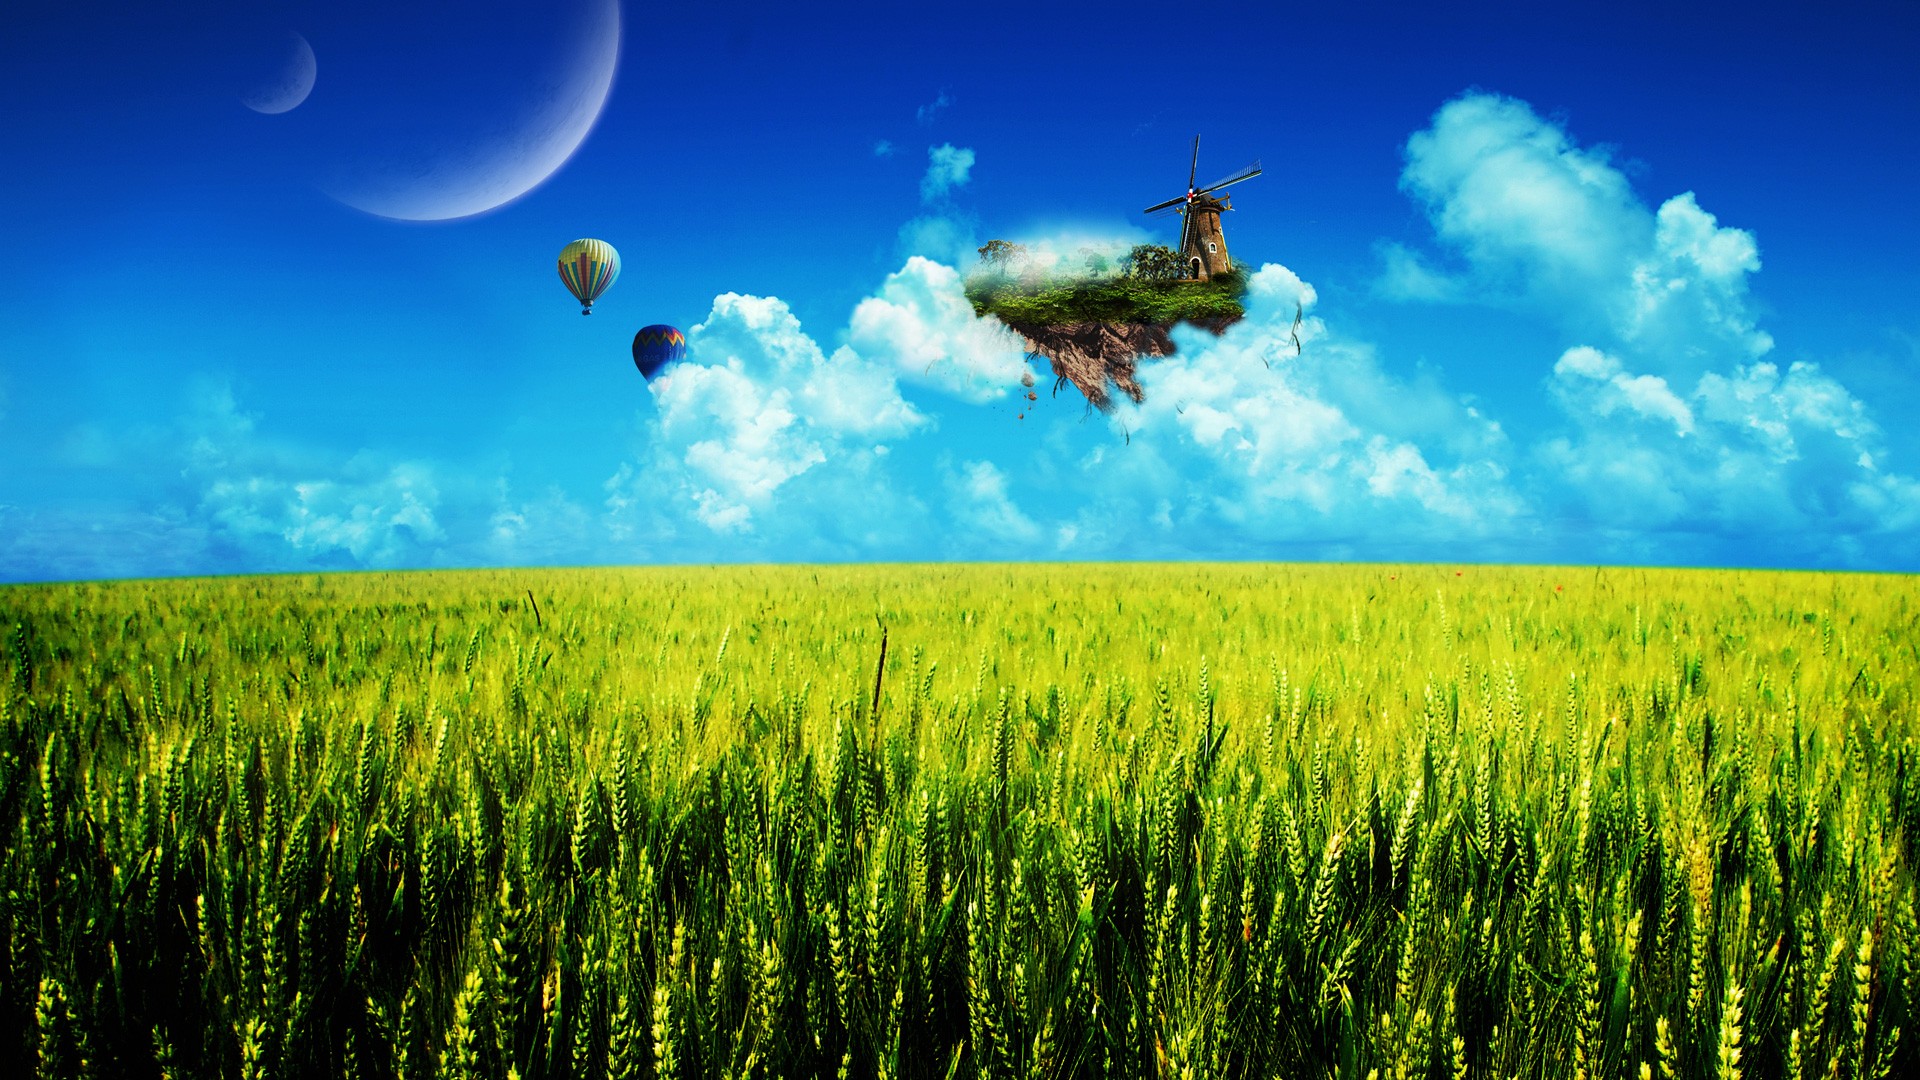 cg, Digital art, Manipulations, Landscapes, Surreal, Fantasy, Balloons, Moons, Wheat, Clouds Wallpaper